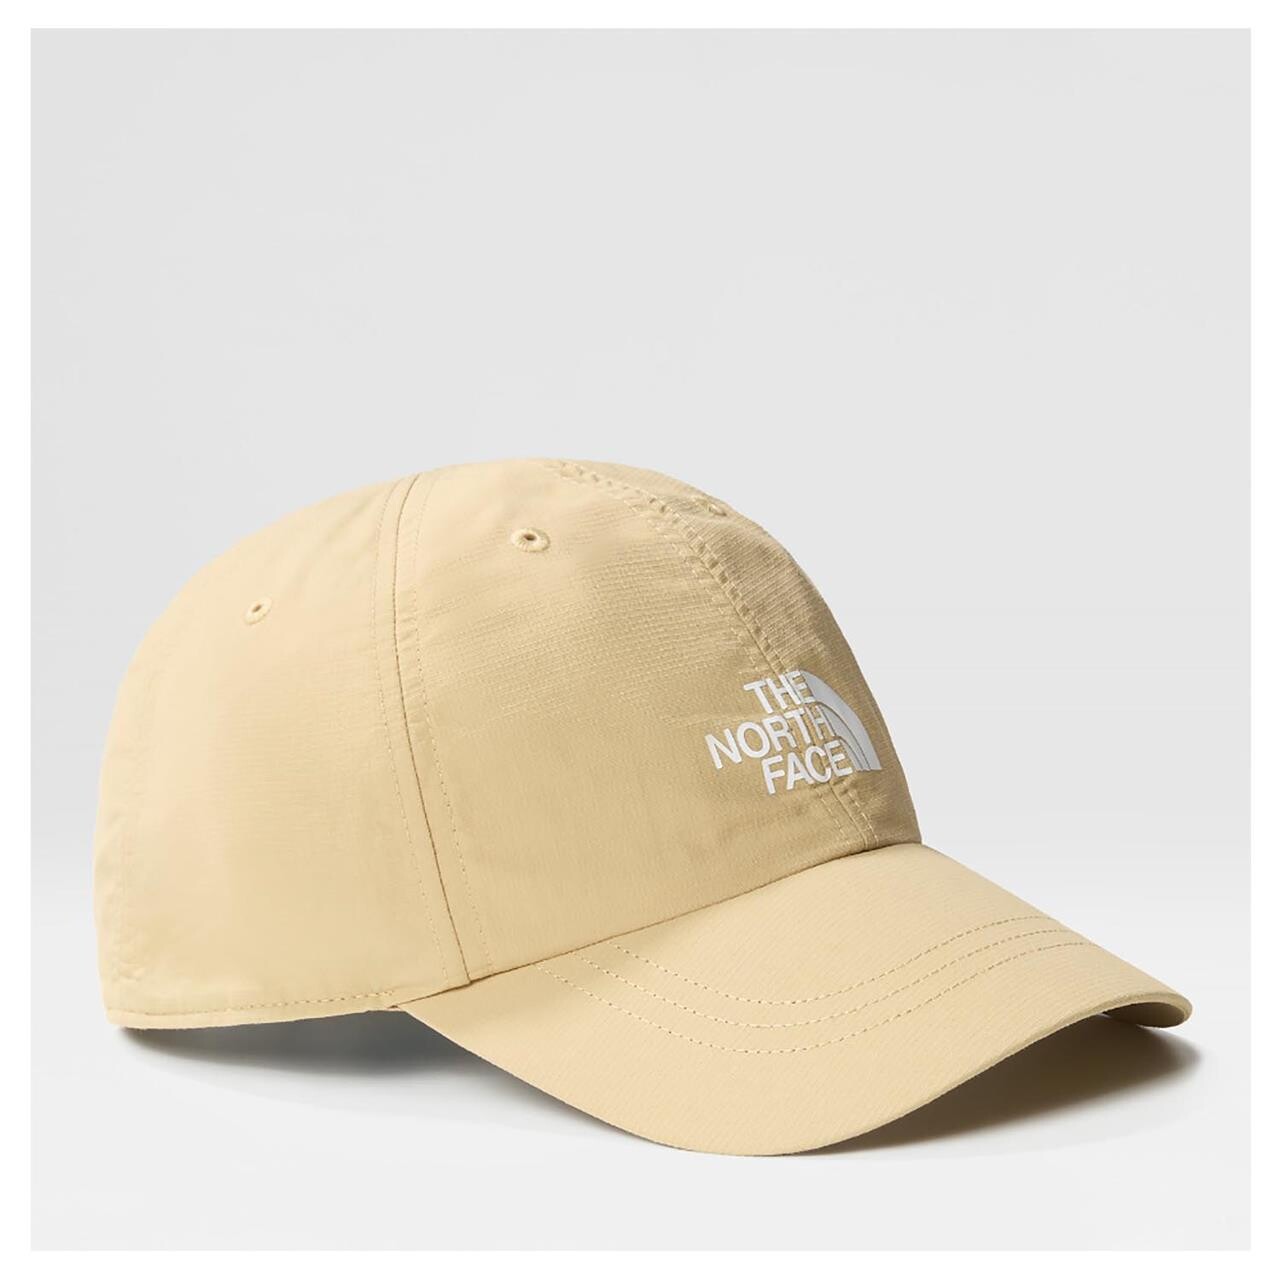 9: The North Face Horizon Hat (Beige (KHAKI STONE) One size)